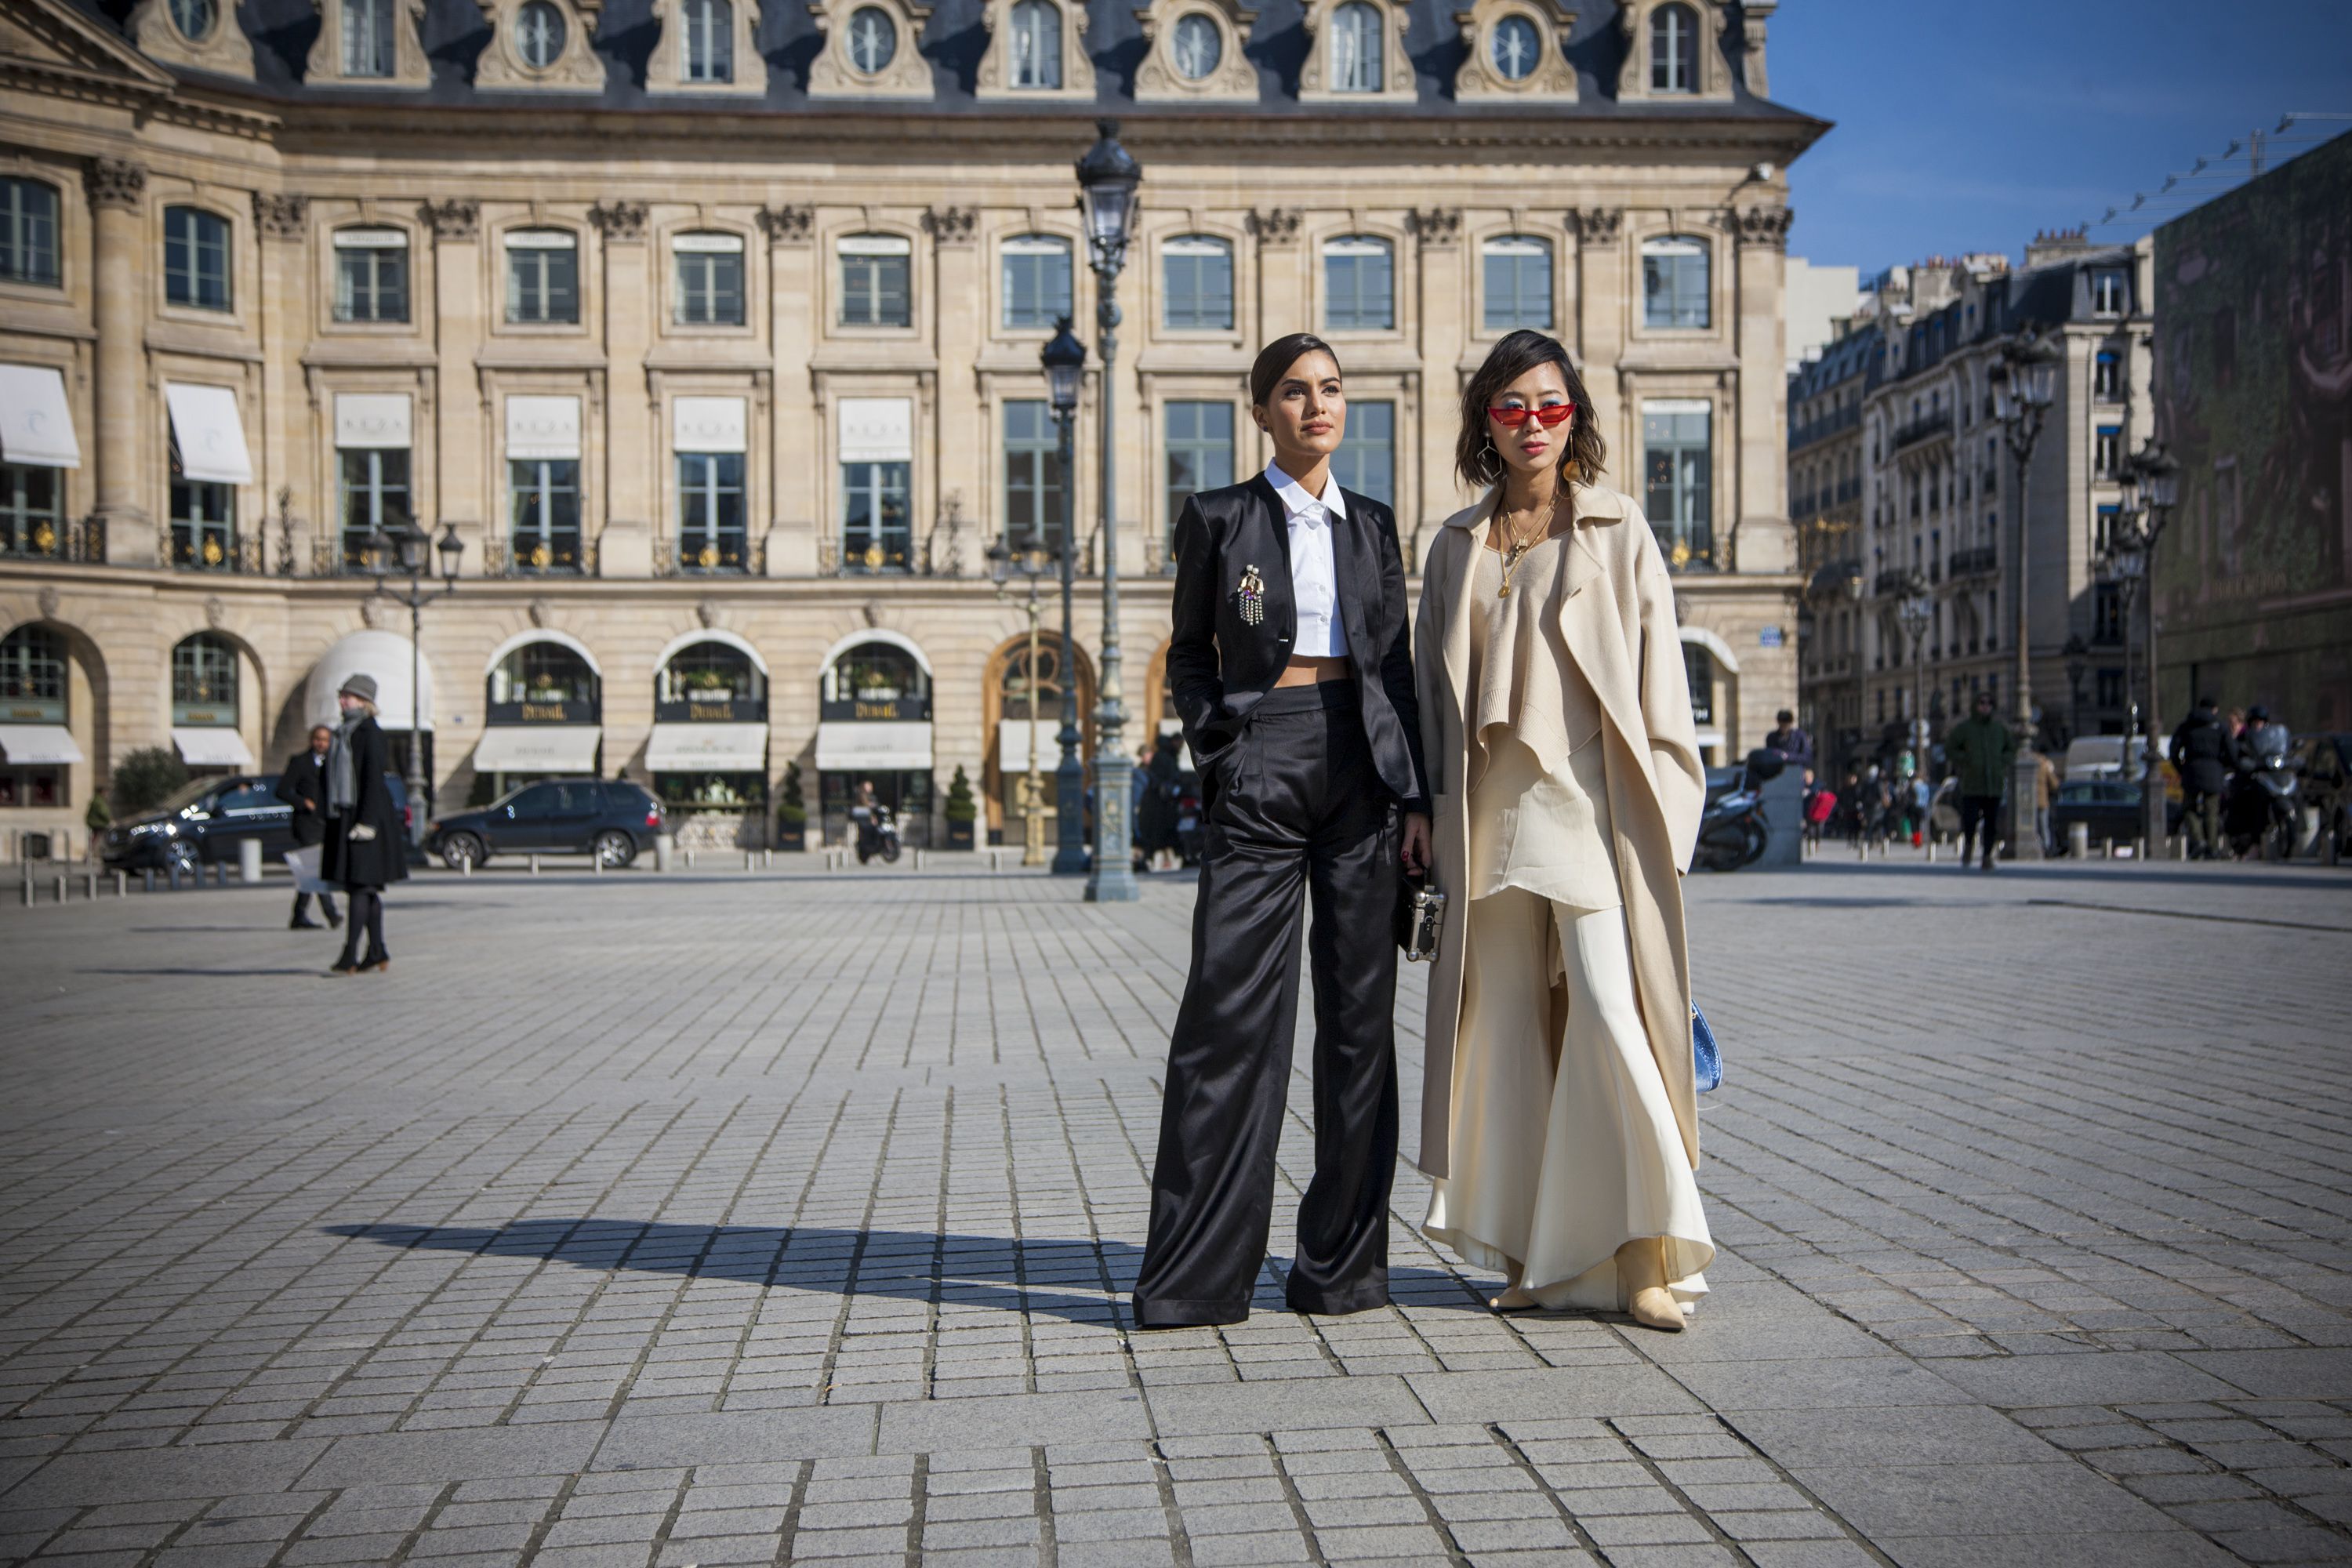 PARIS LUXURY : Paris art, fashion and luxury magazine